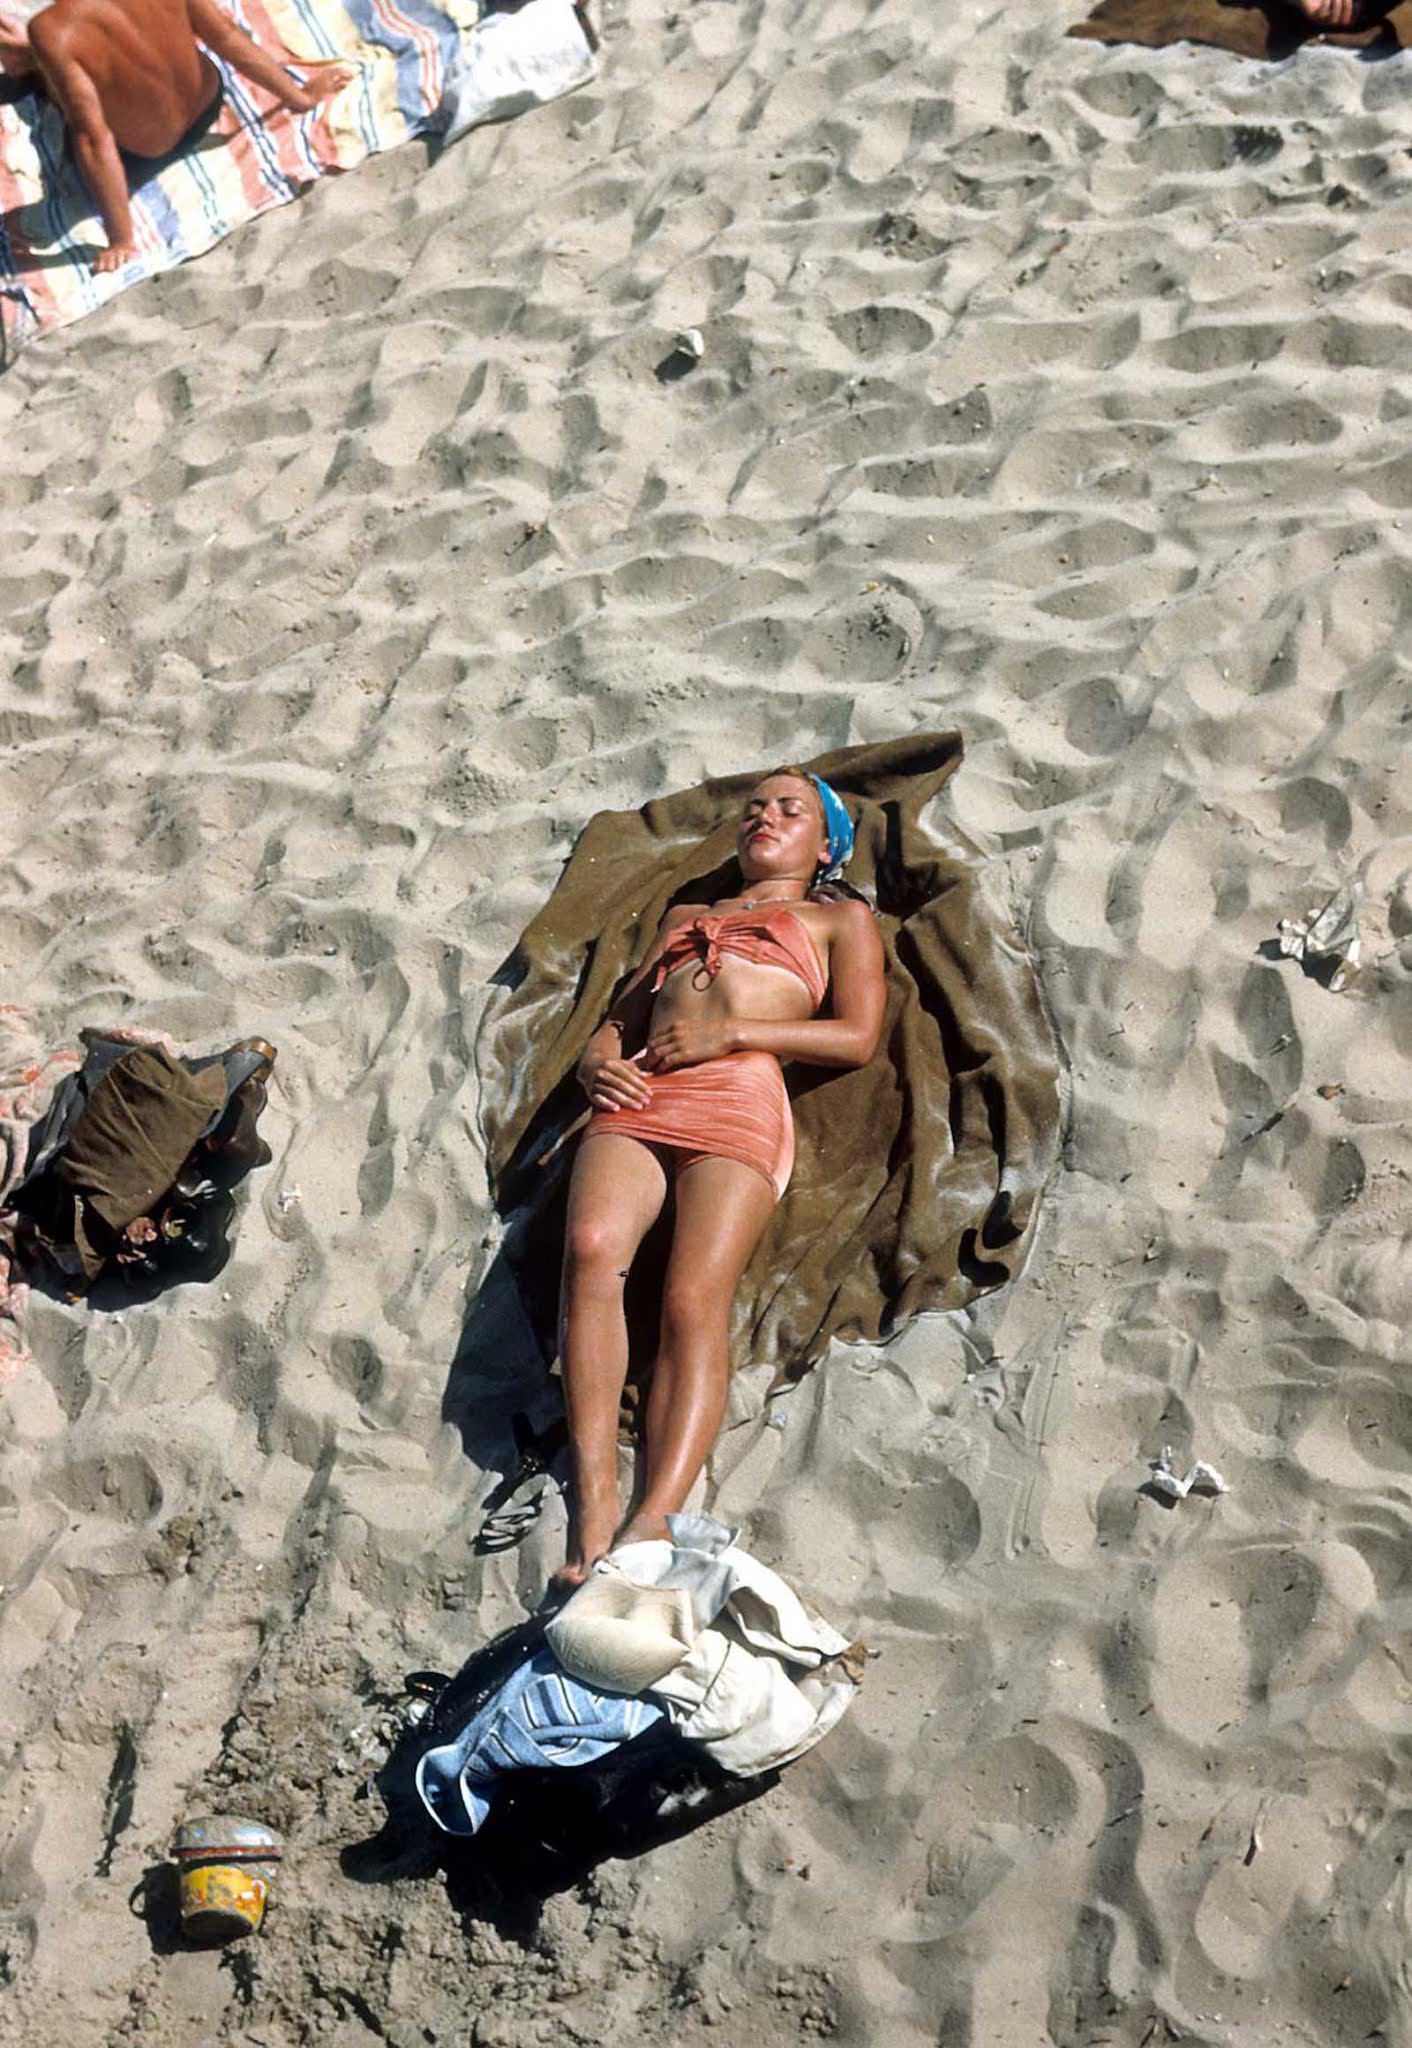 A woman sunbathes on Coney Island beach.